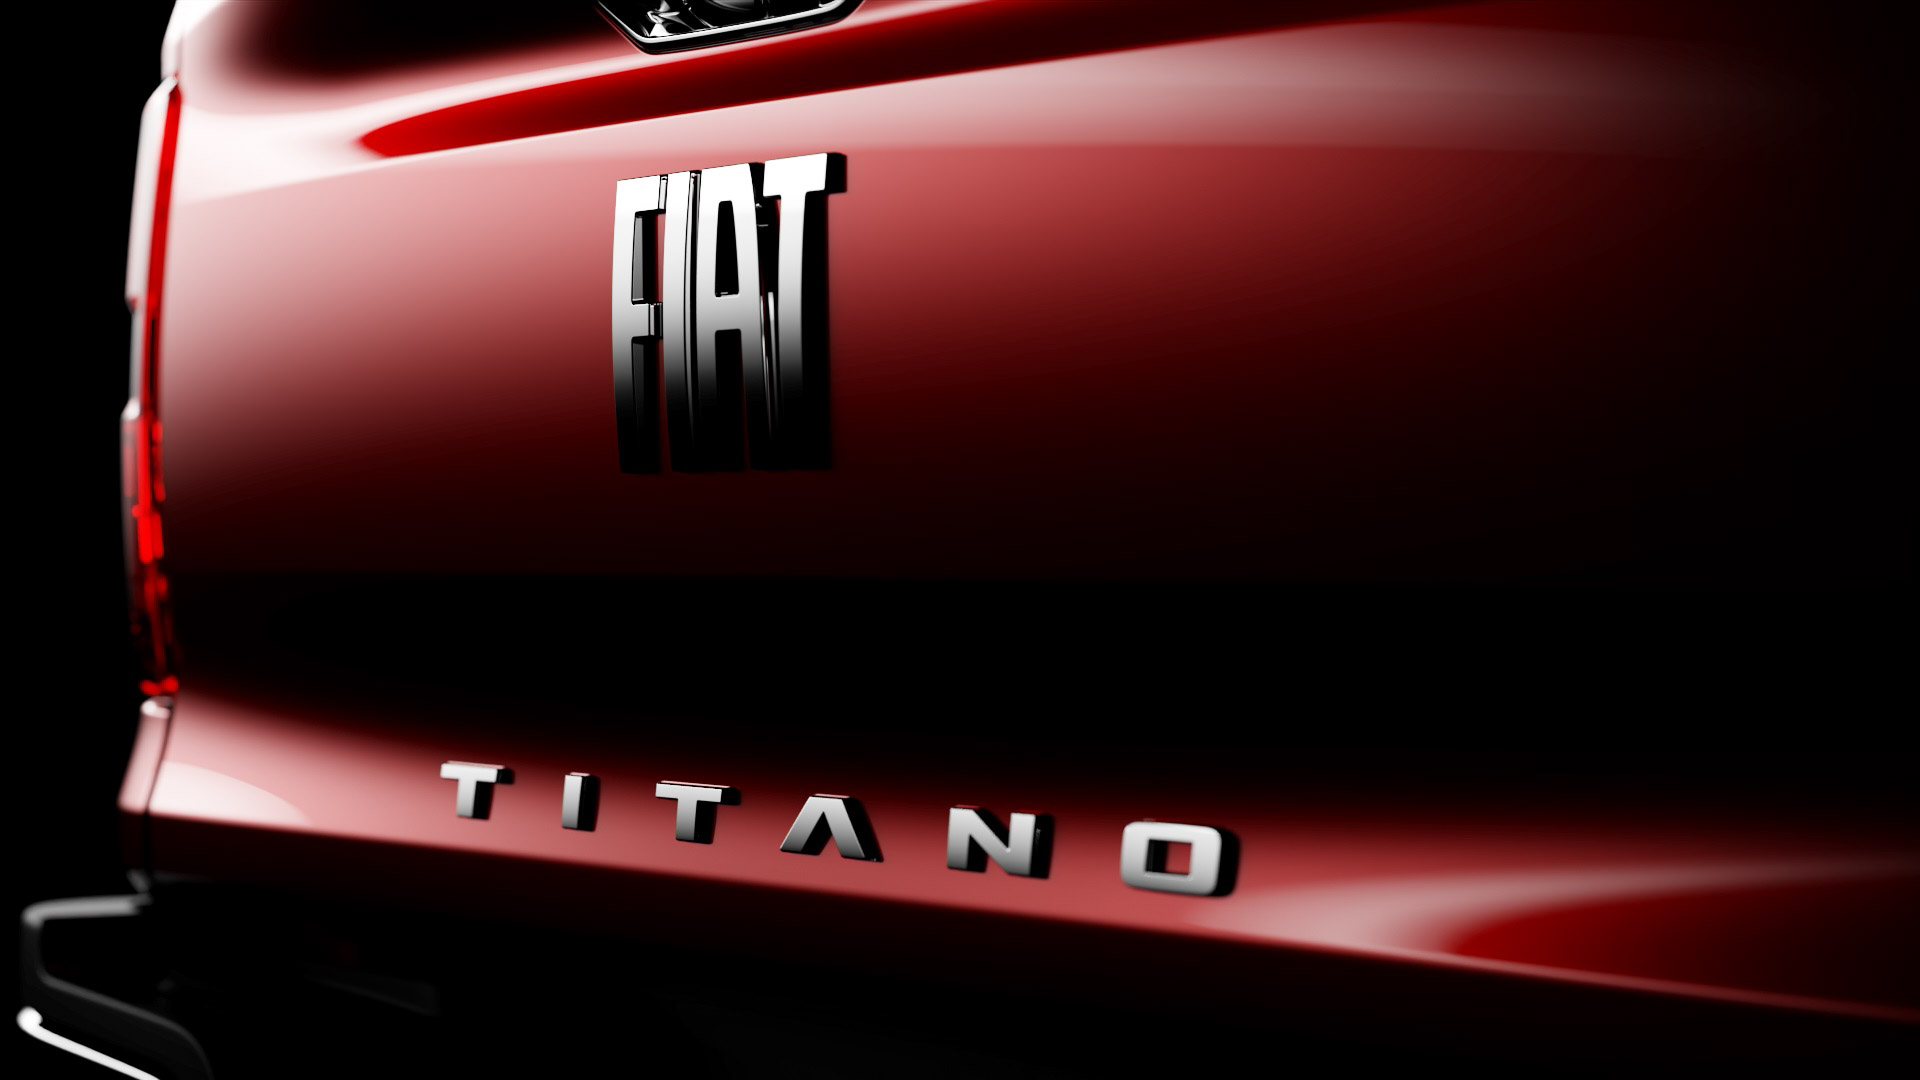 Fiat-Titano-pickup-Latinoamérica